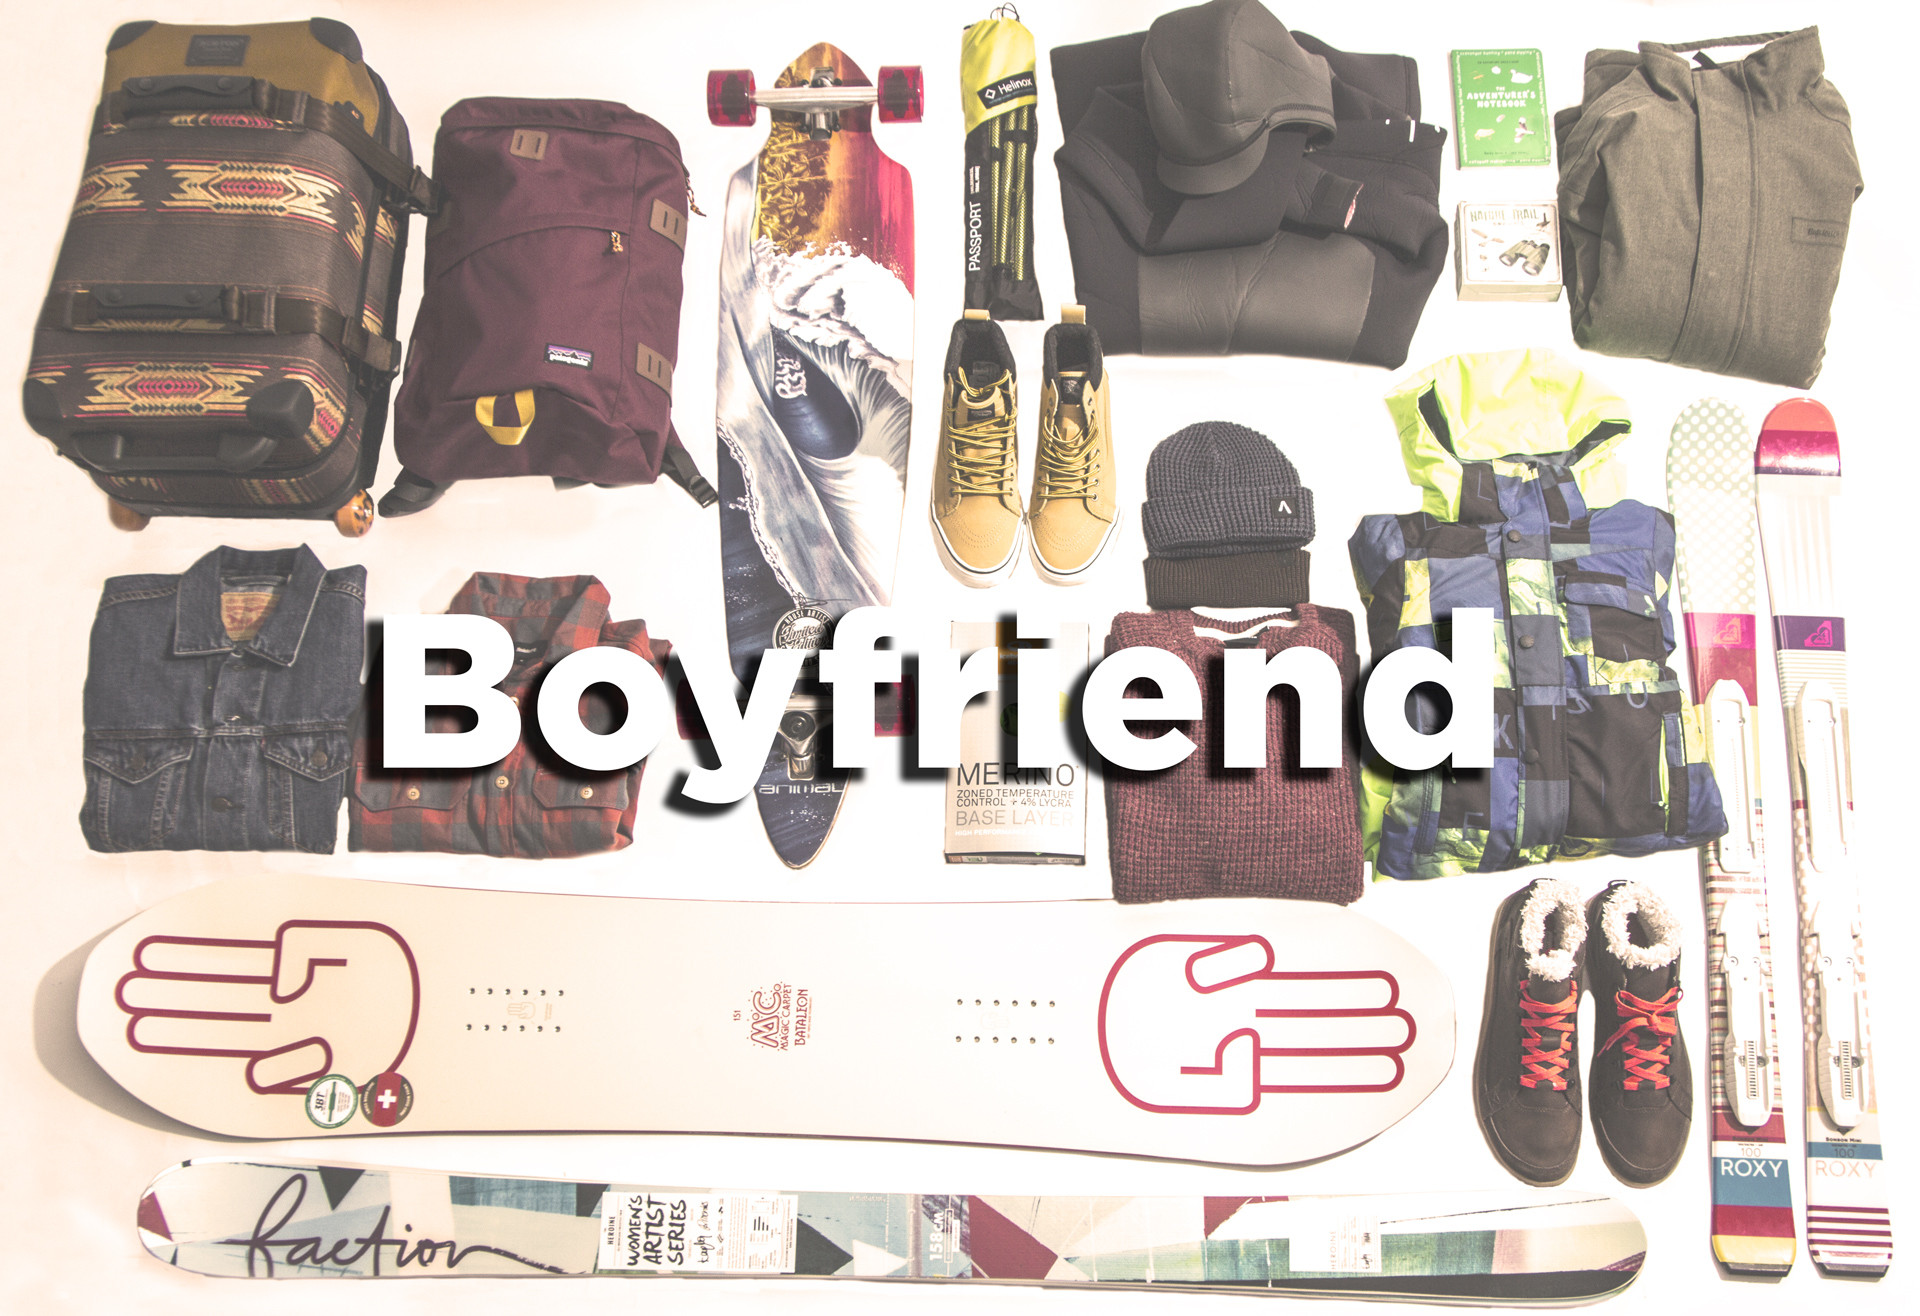 Boyfriend Christmas Gift Ideas
 Christmas Gift Ideas For A Boyfriend 15 Great Gifts